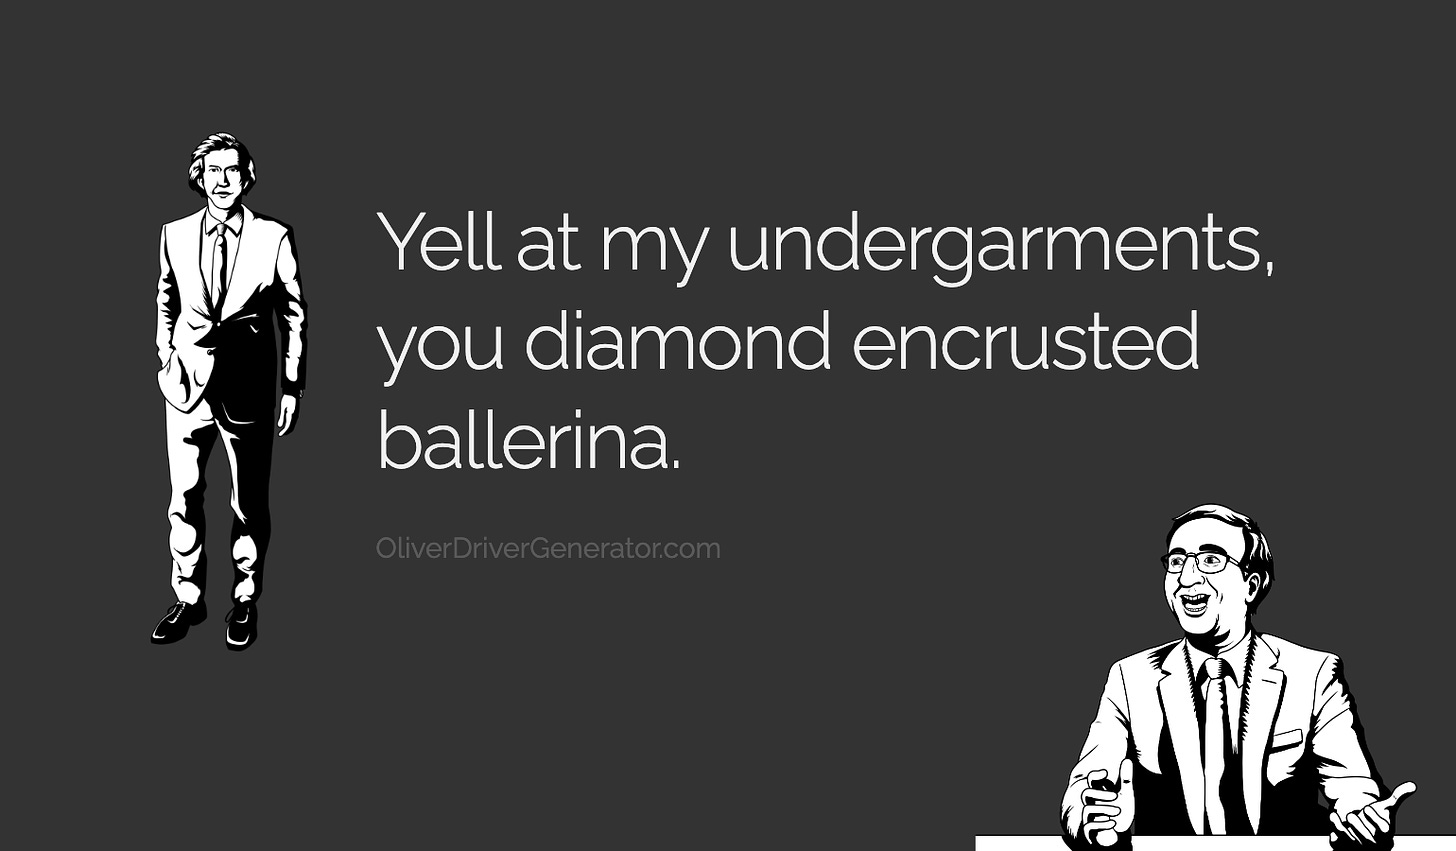 Yell at my undergarments you diamond encrusted ballerina.